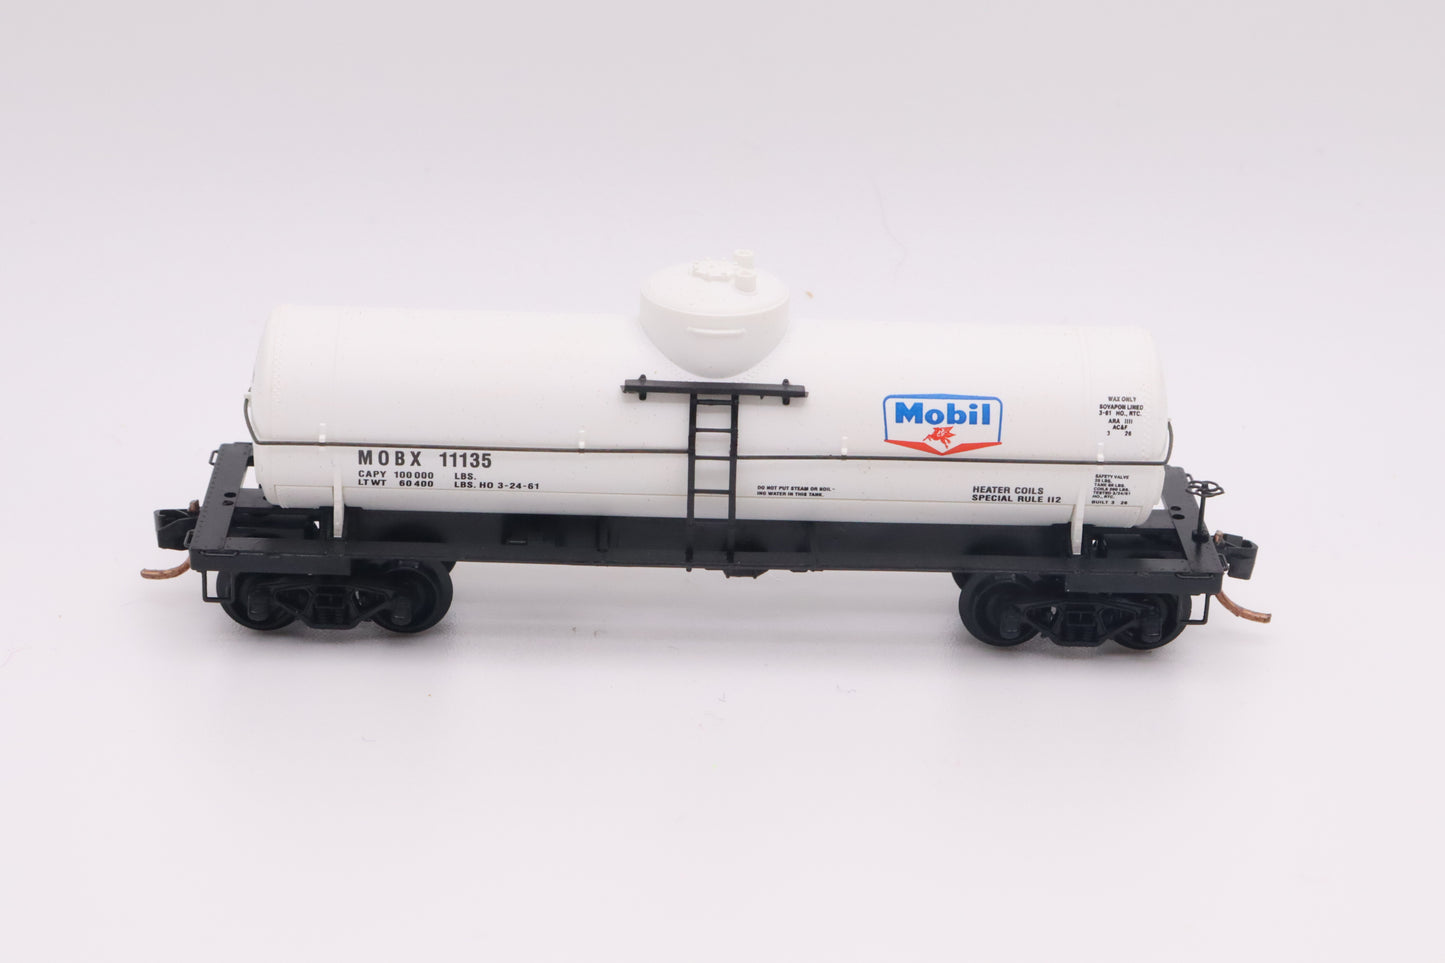 MTL-65120 - 39' Single Dome Tank Car - Mobil Oil - MOBX-11129